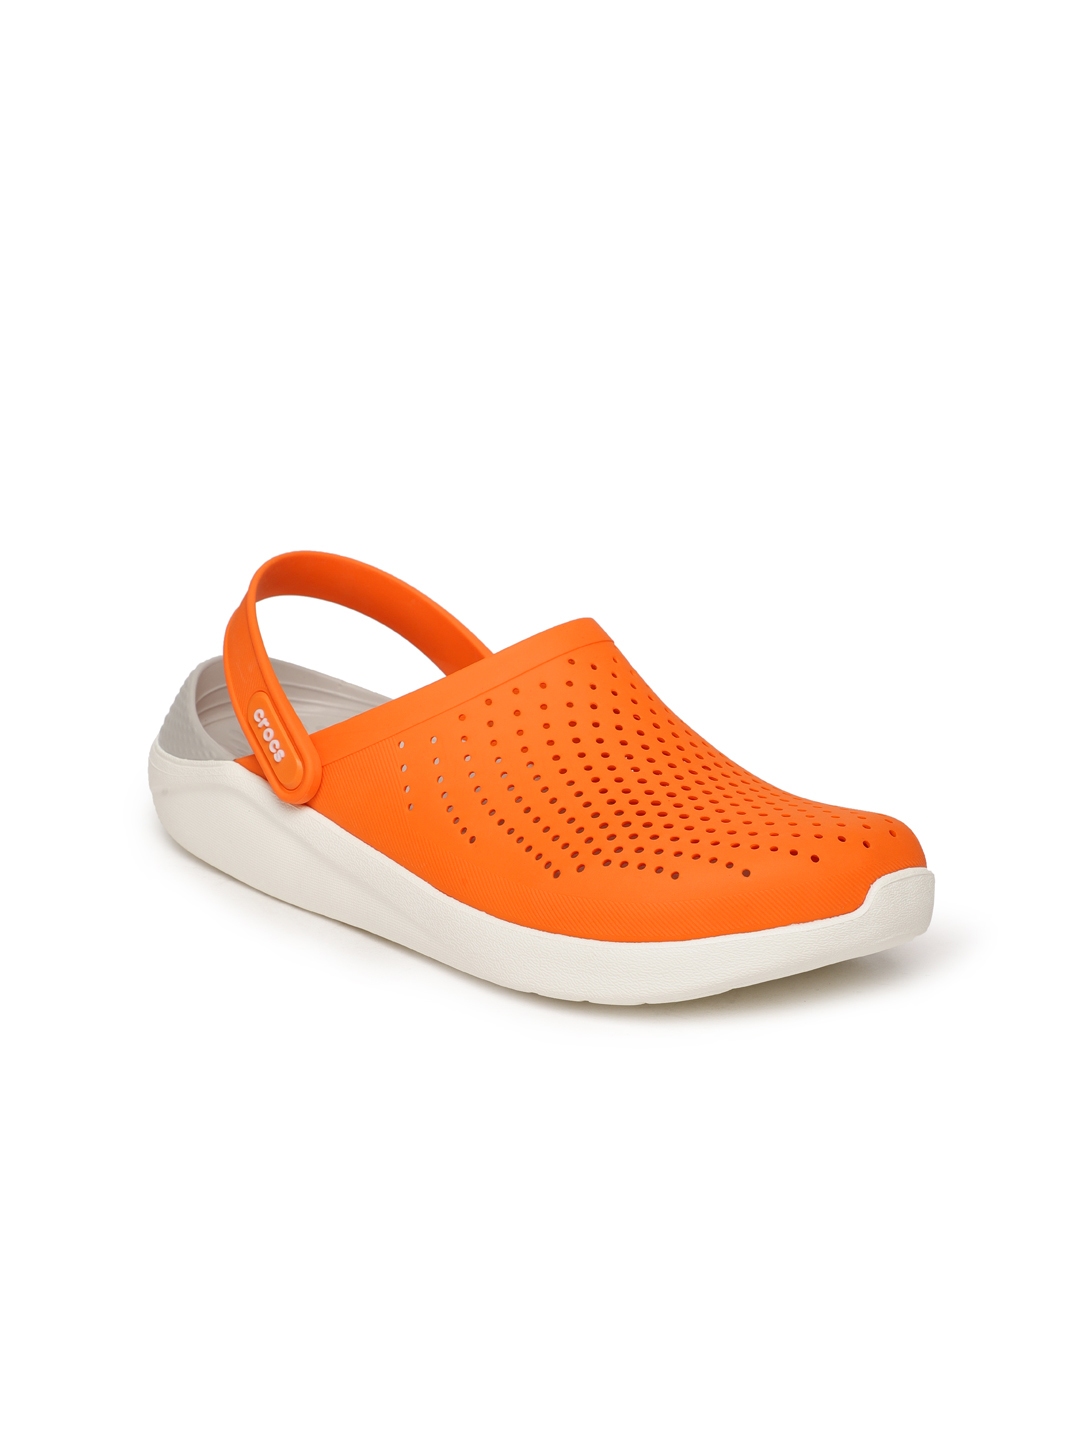 Crocs Unisex Orange Clogs - Flip Flops 